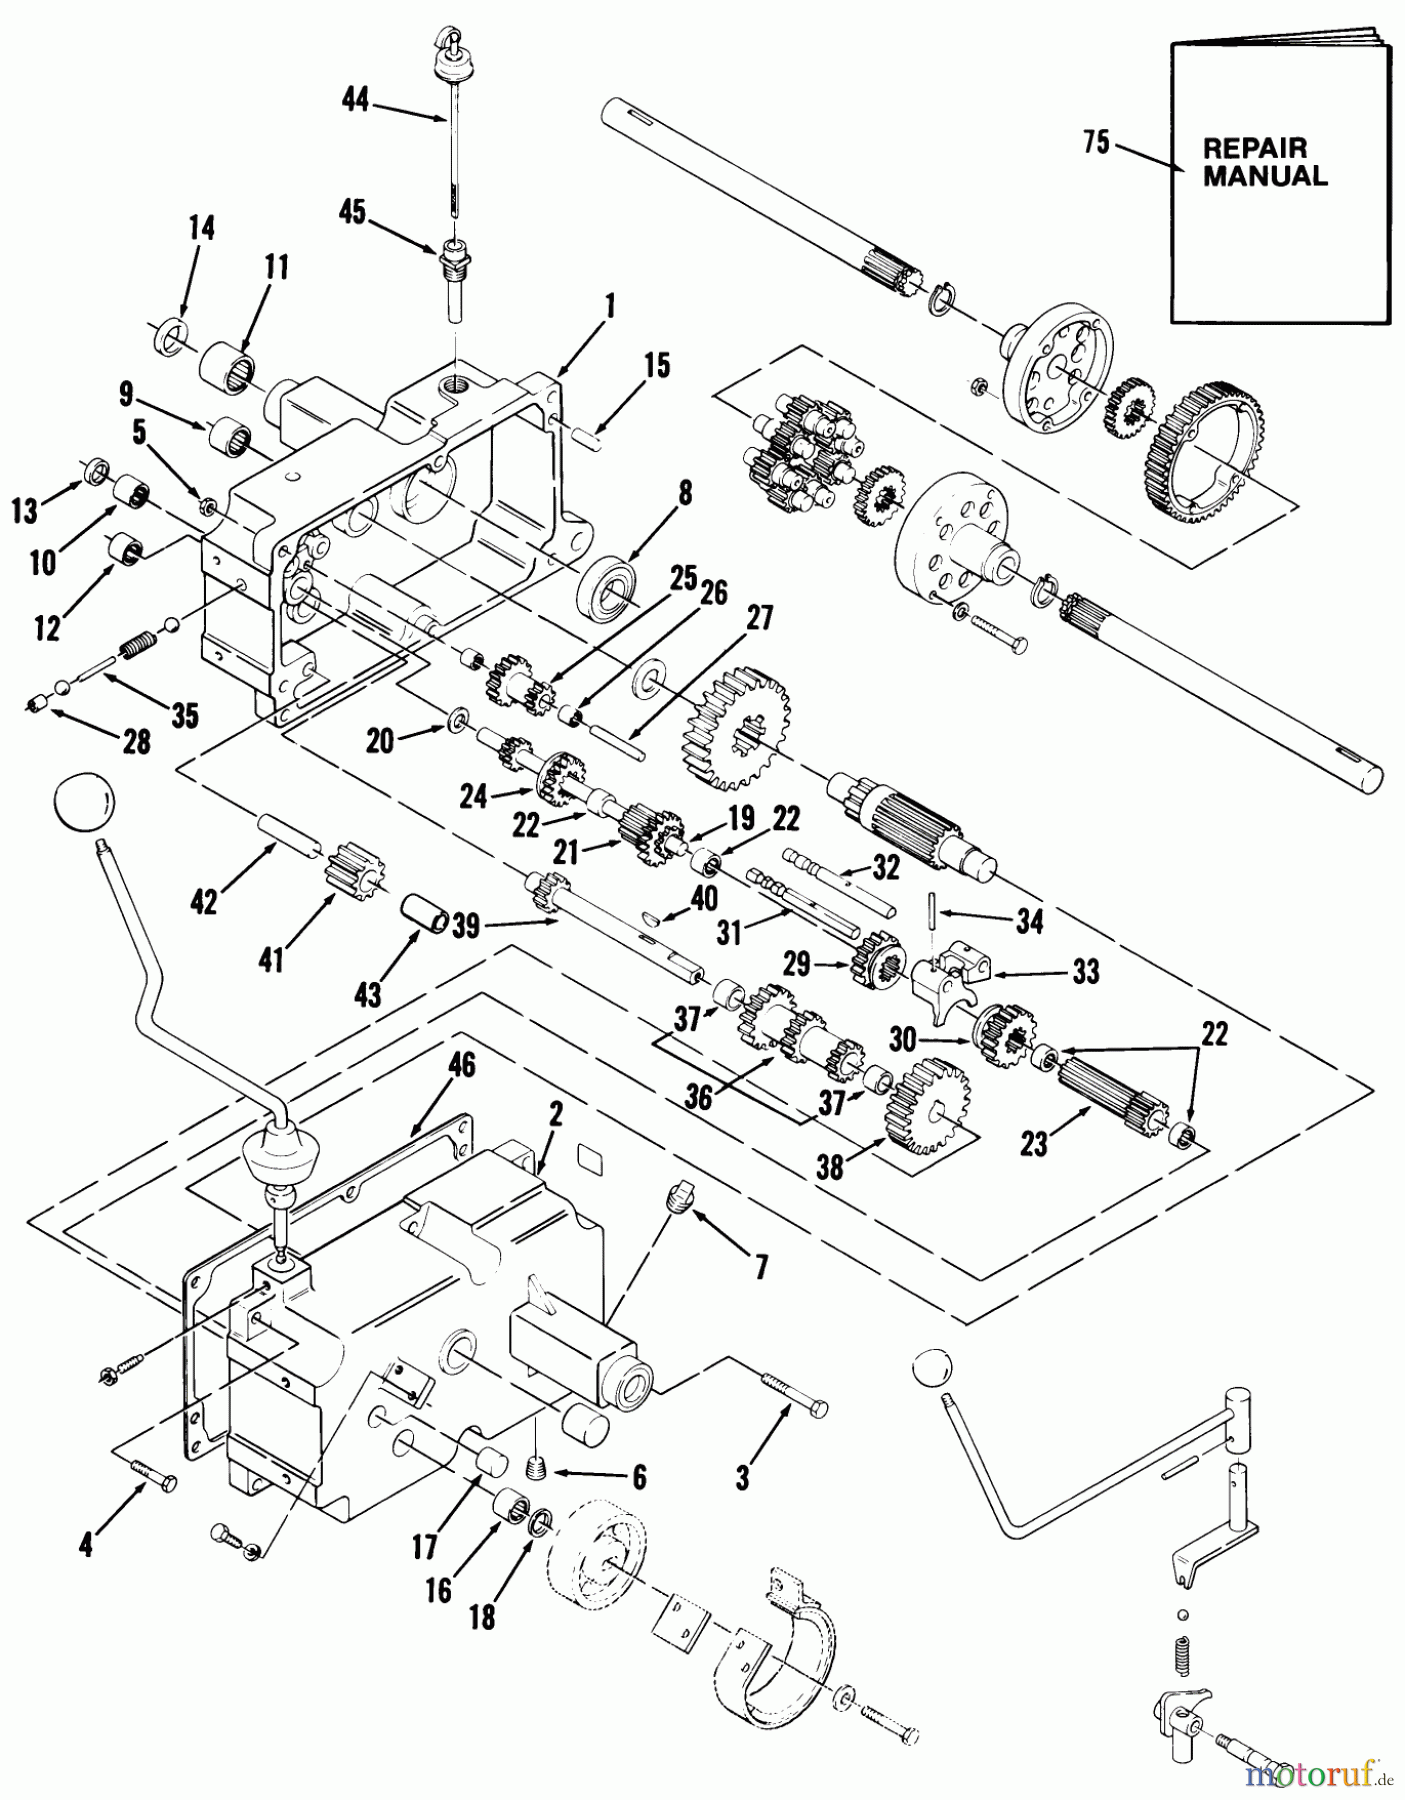  Toro Neu Mowers, Lawn & Garden Tractor Seite 1 01-14KE04 (C-145) - Toro C-145 Automatic Tractor, 1983 MECHANICAL TRANSMISSION-8 SPEED #1